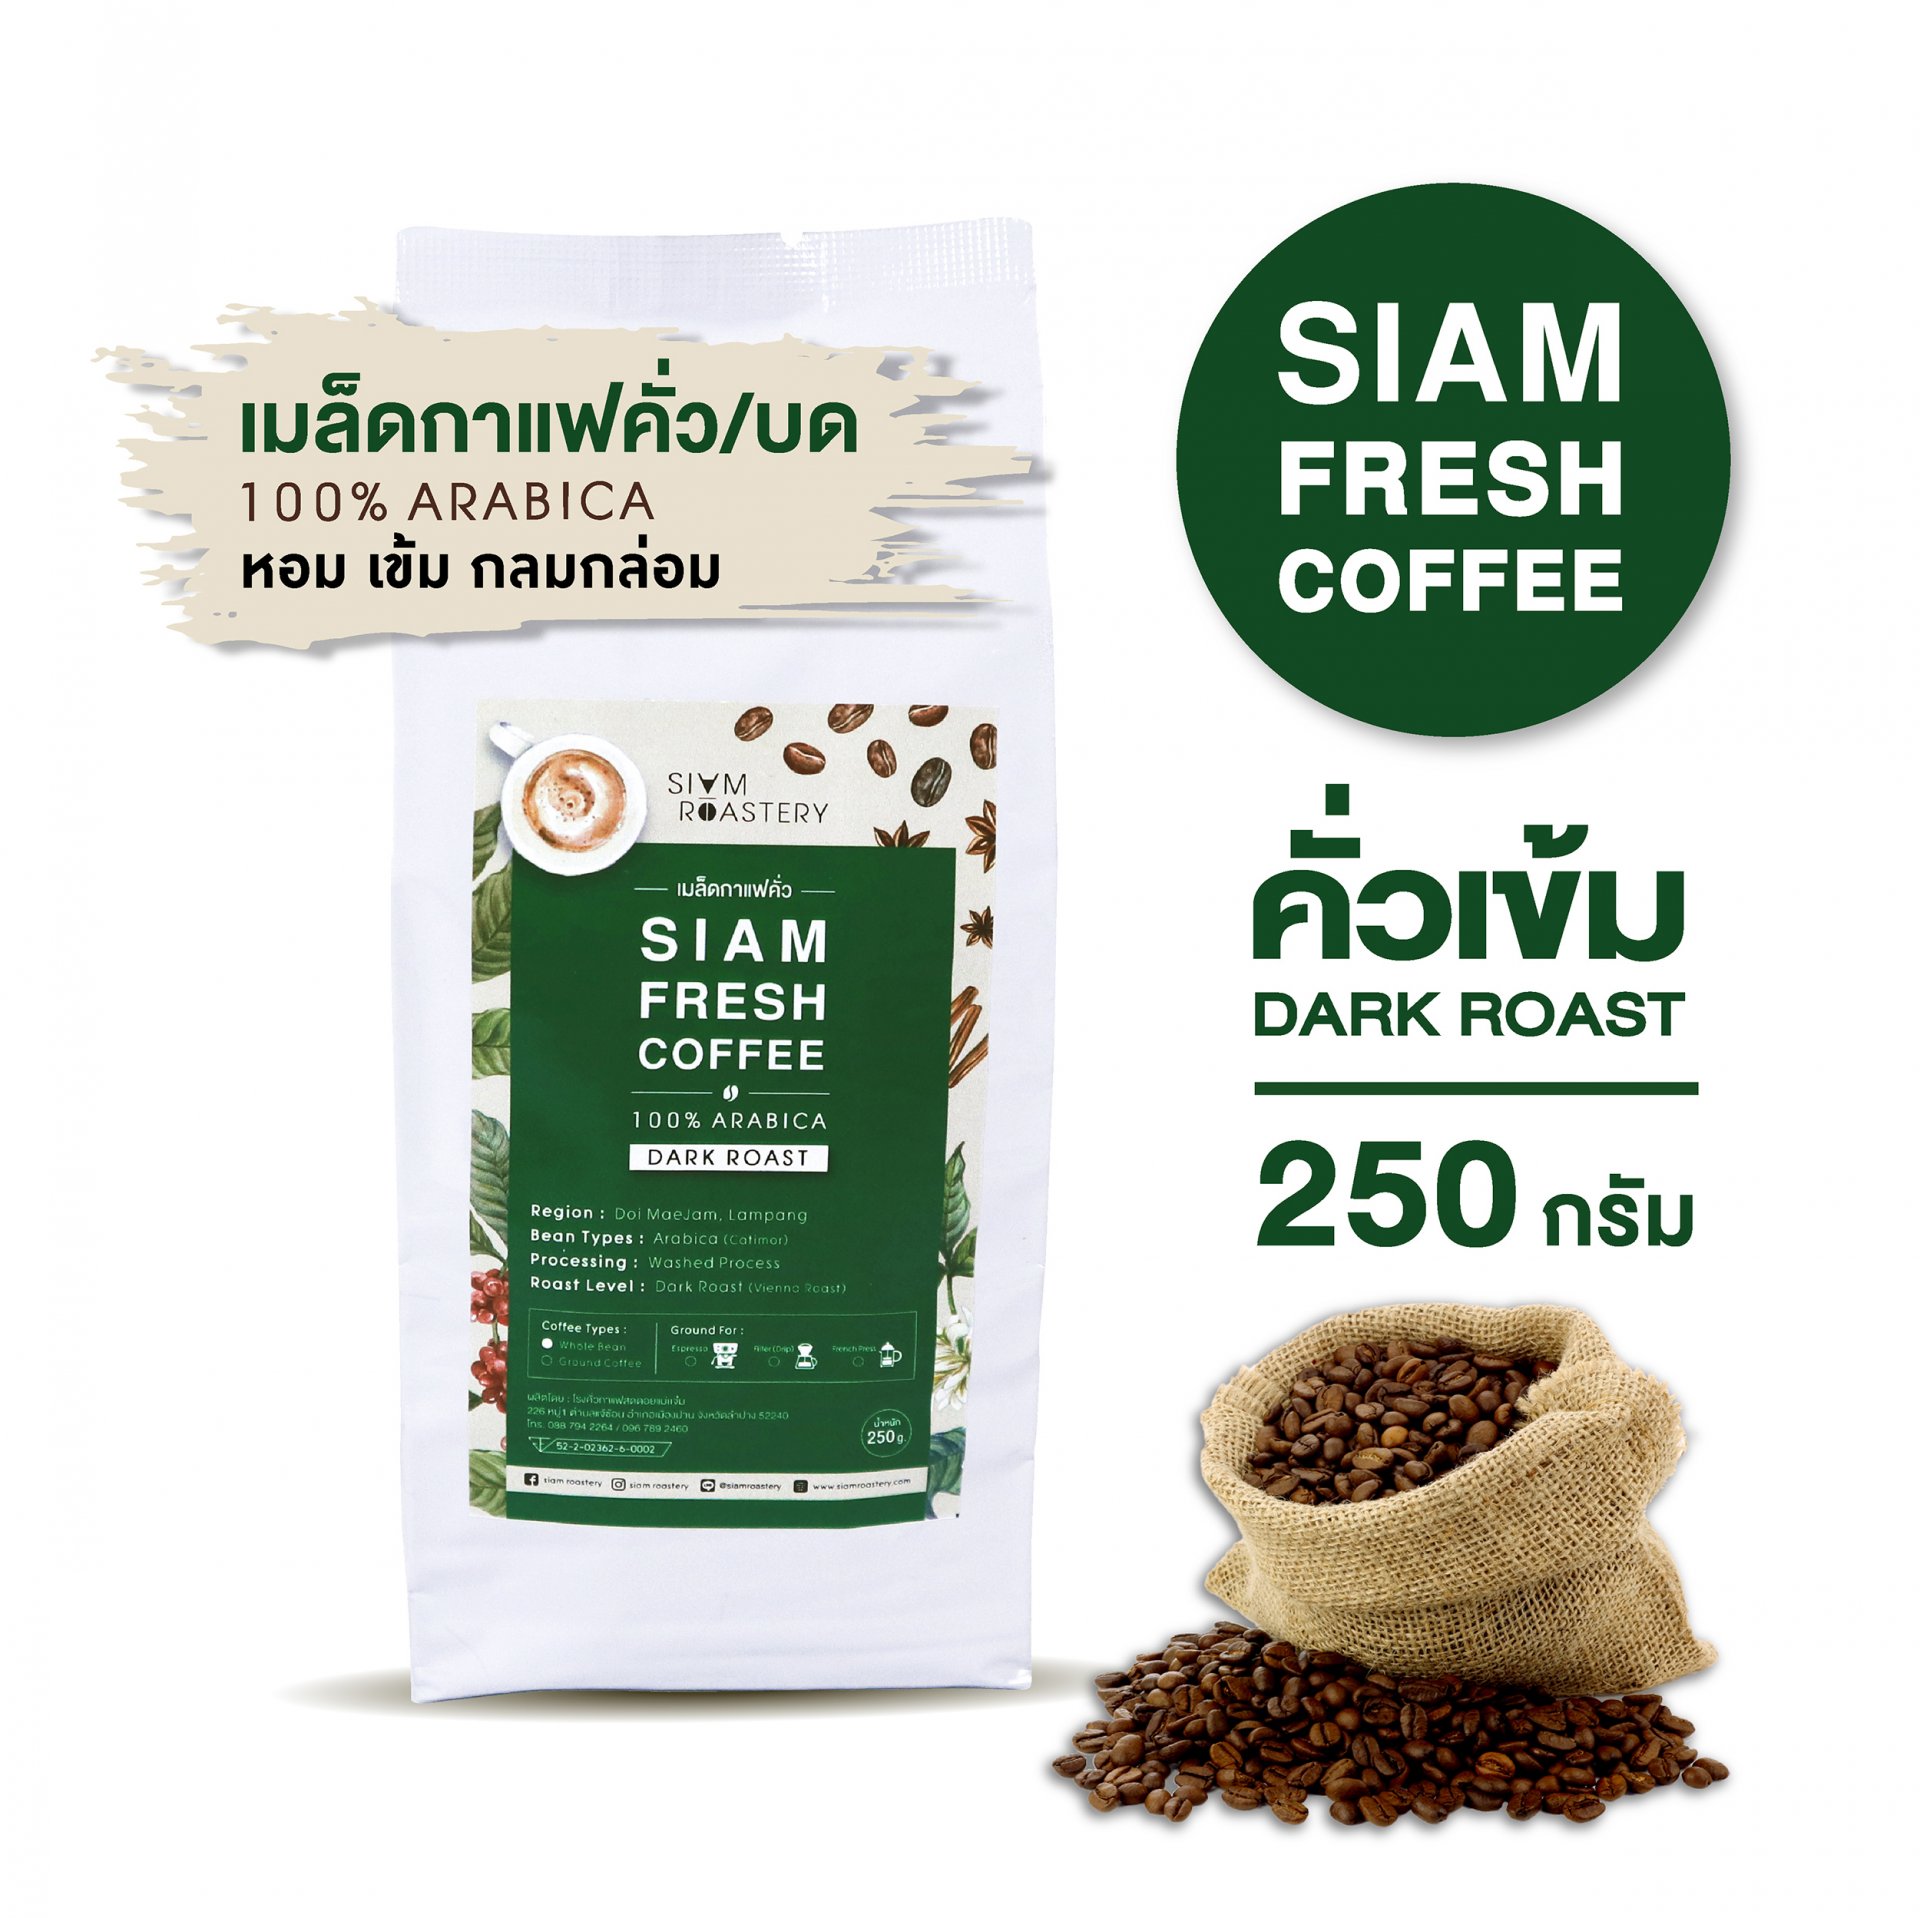 Siam Fresh Coffee